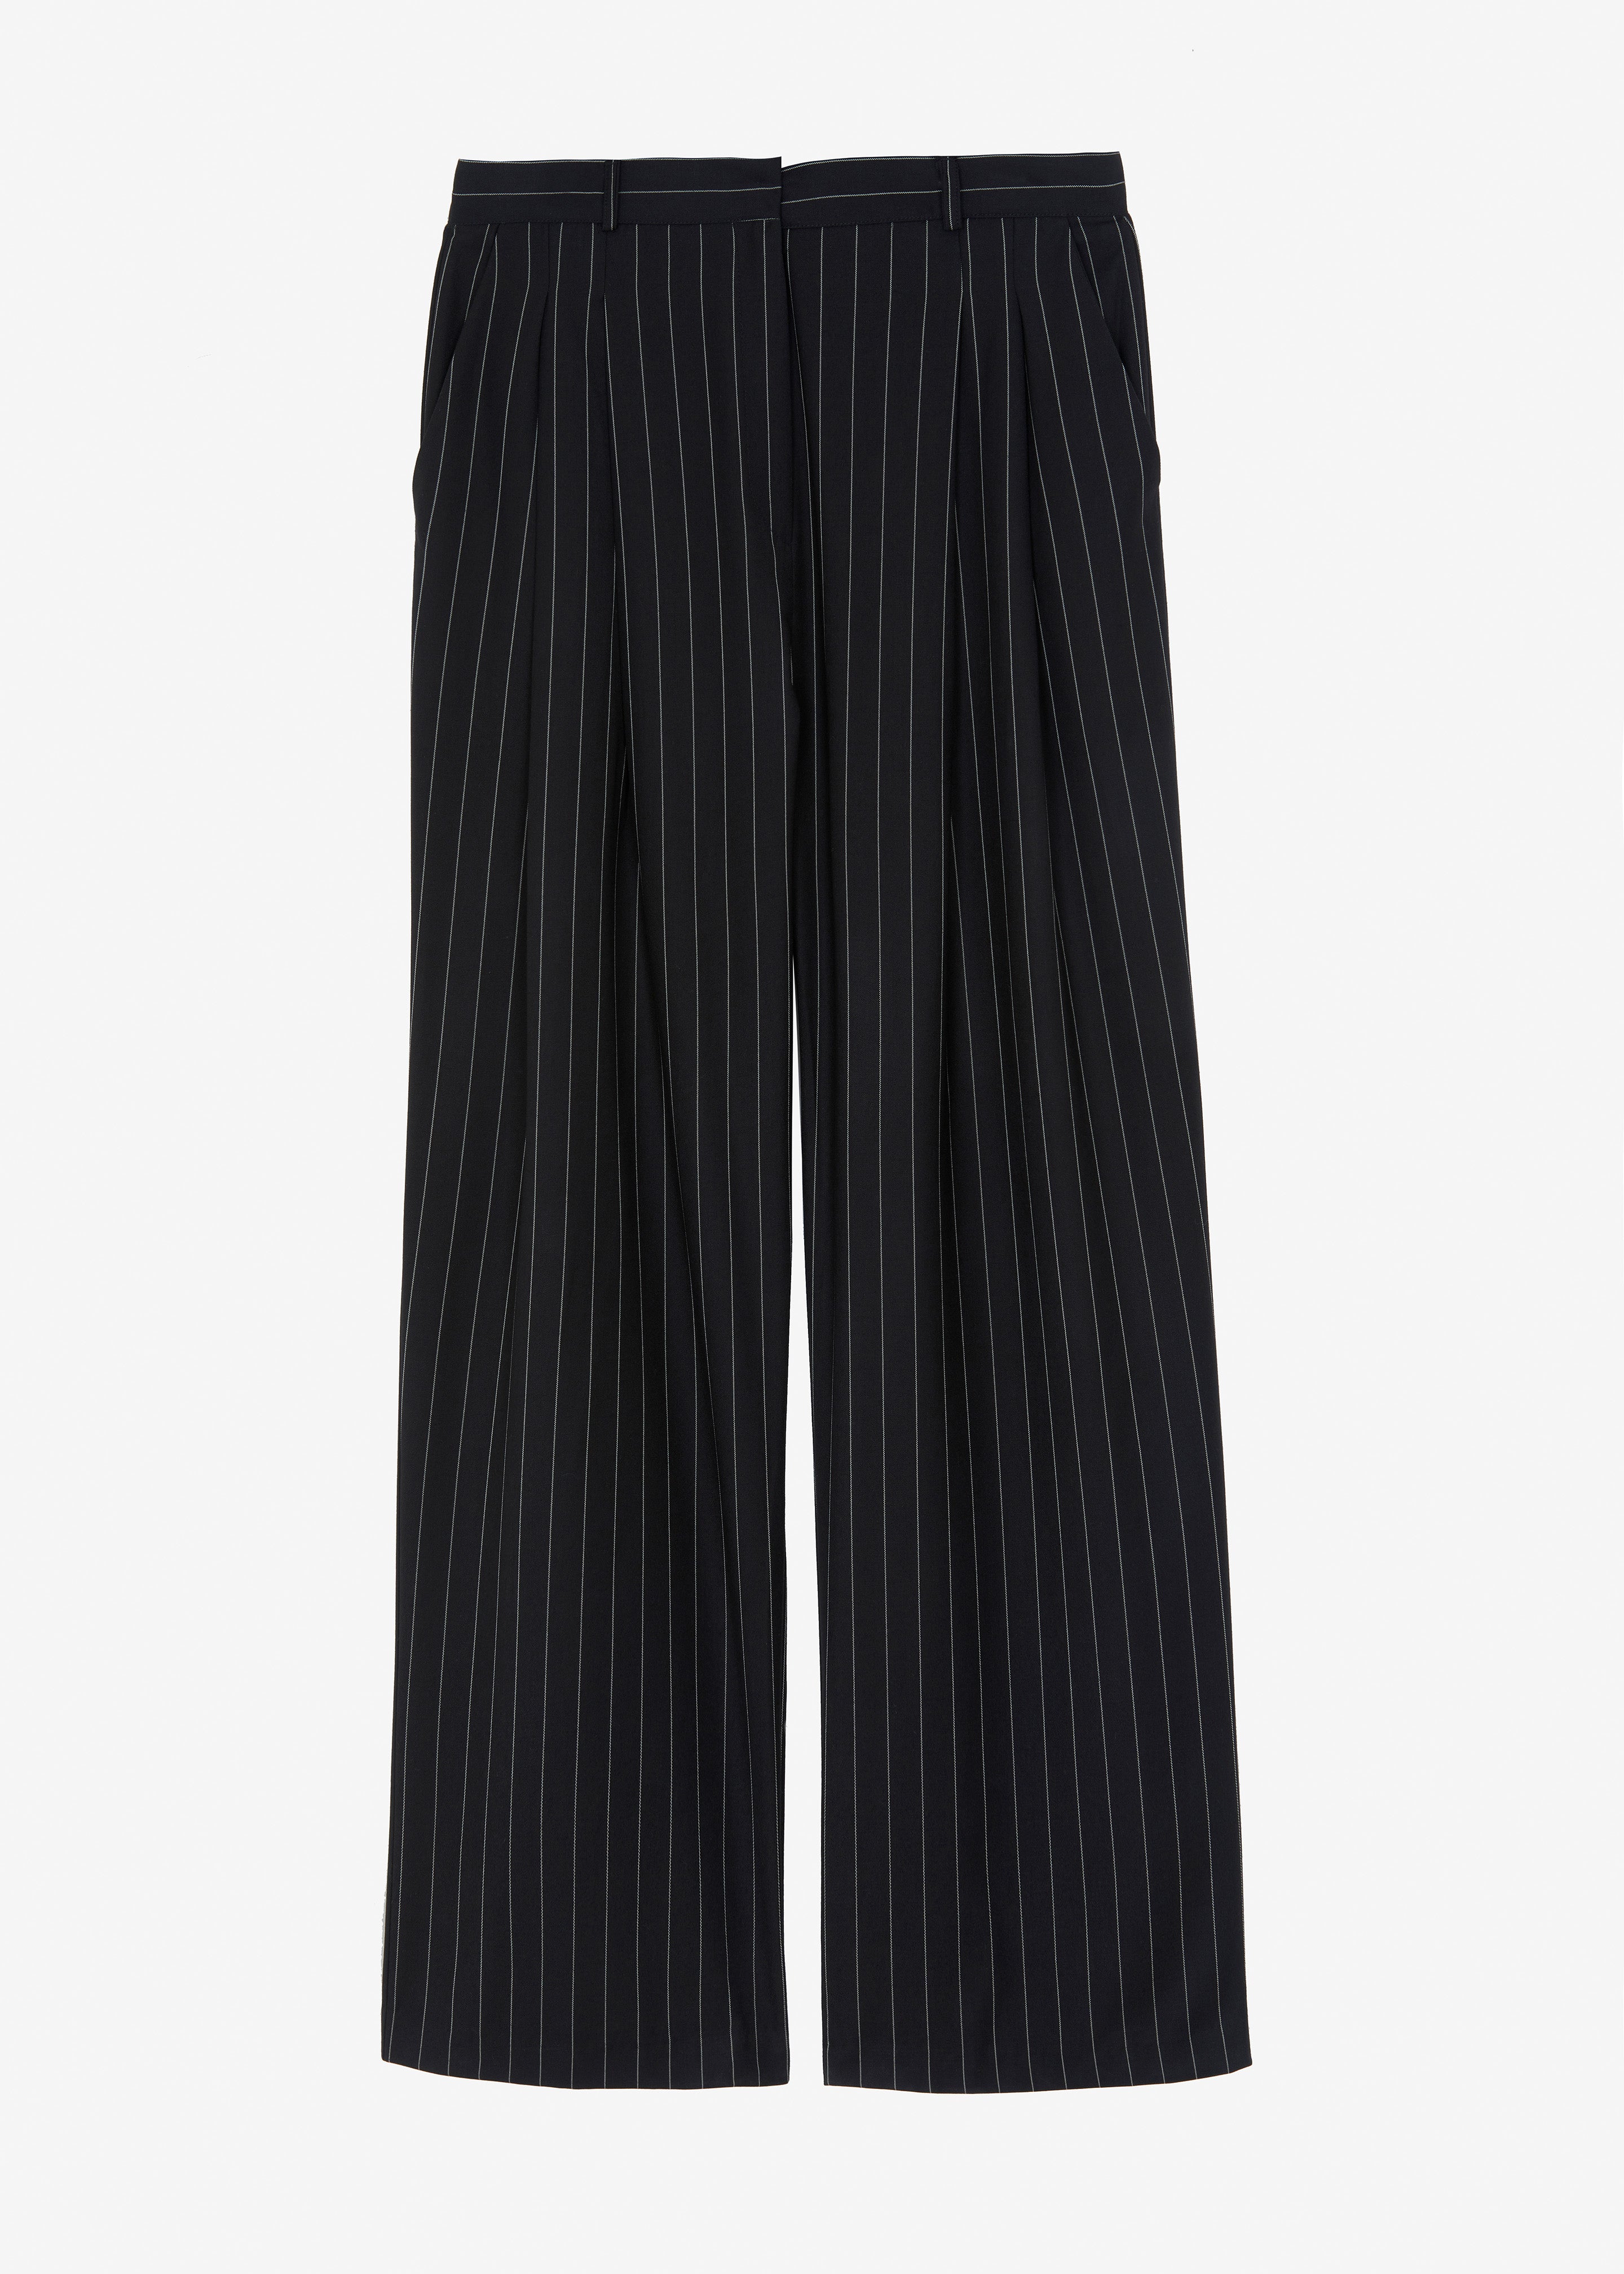 Sybil Trousers - Black Pinstripe - 10